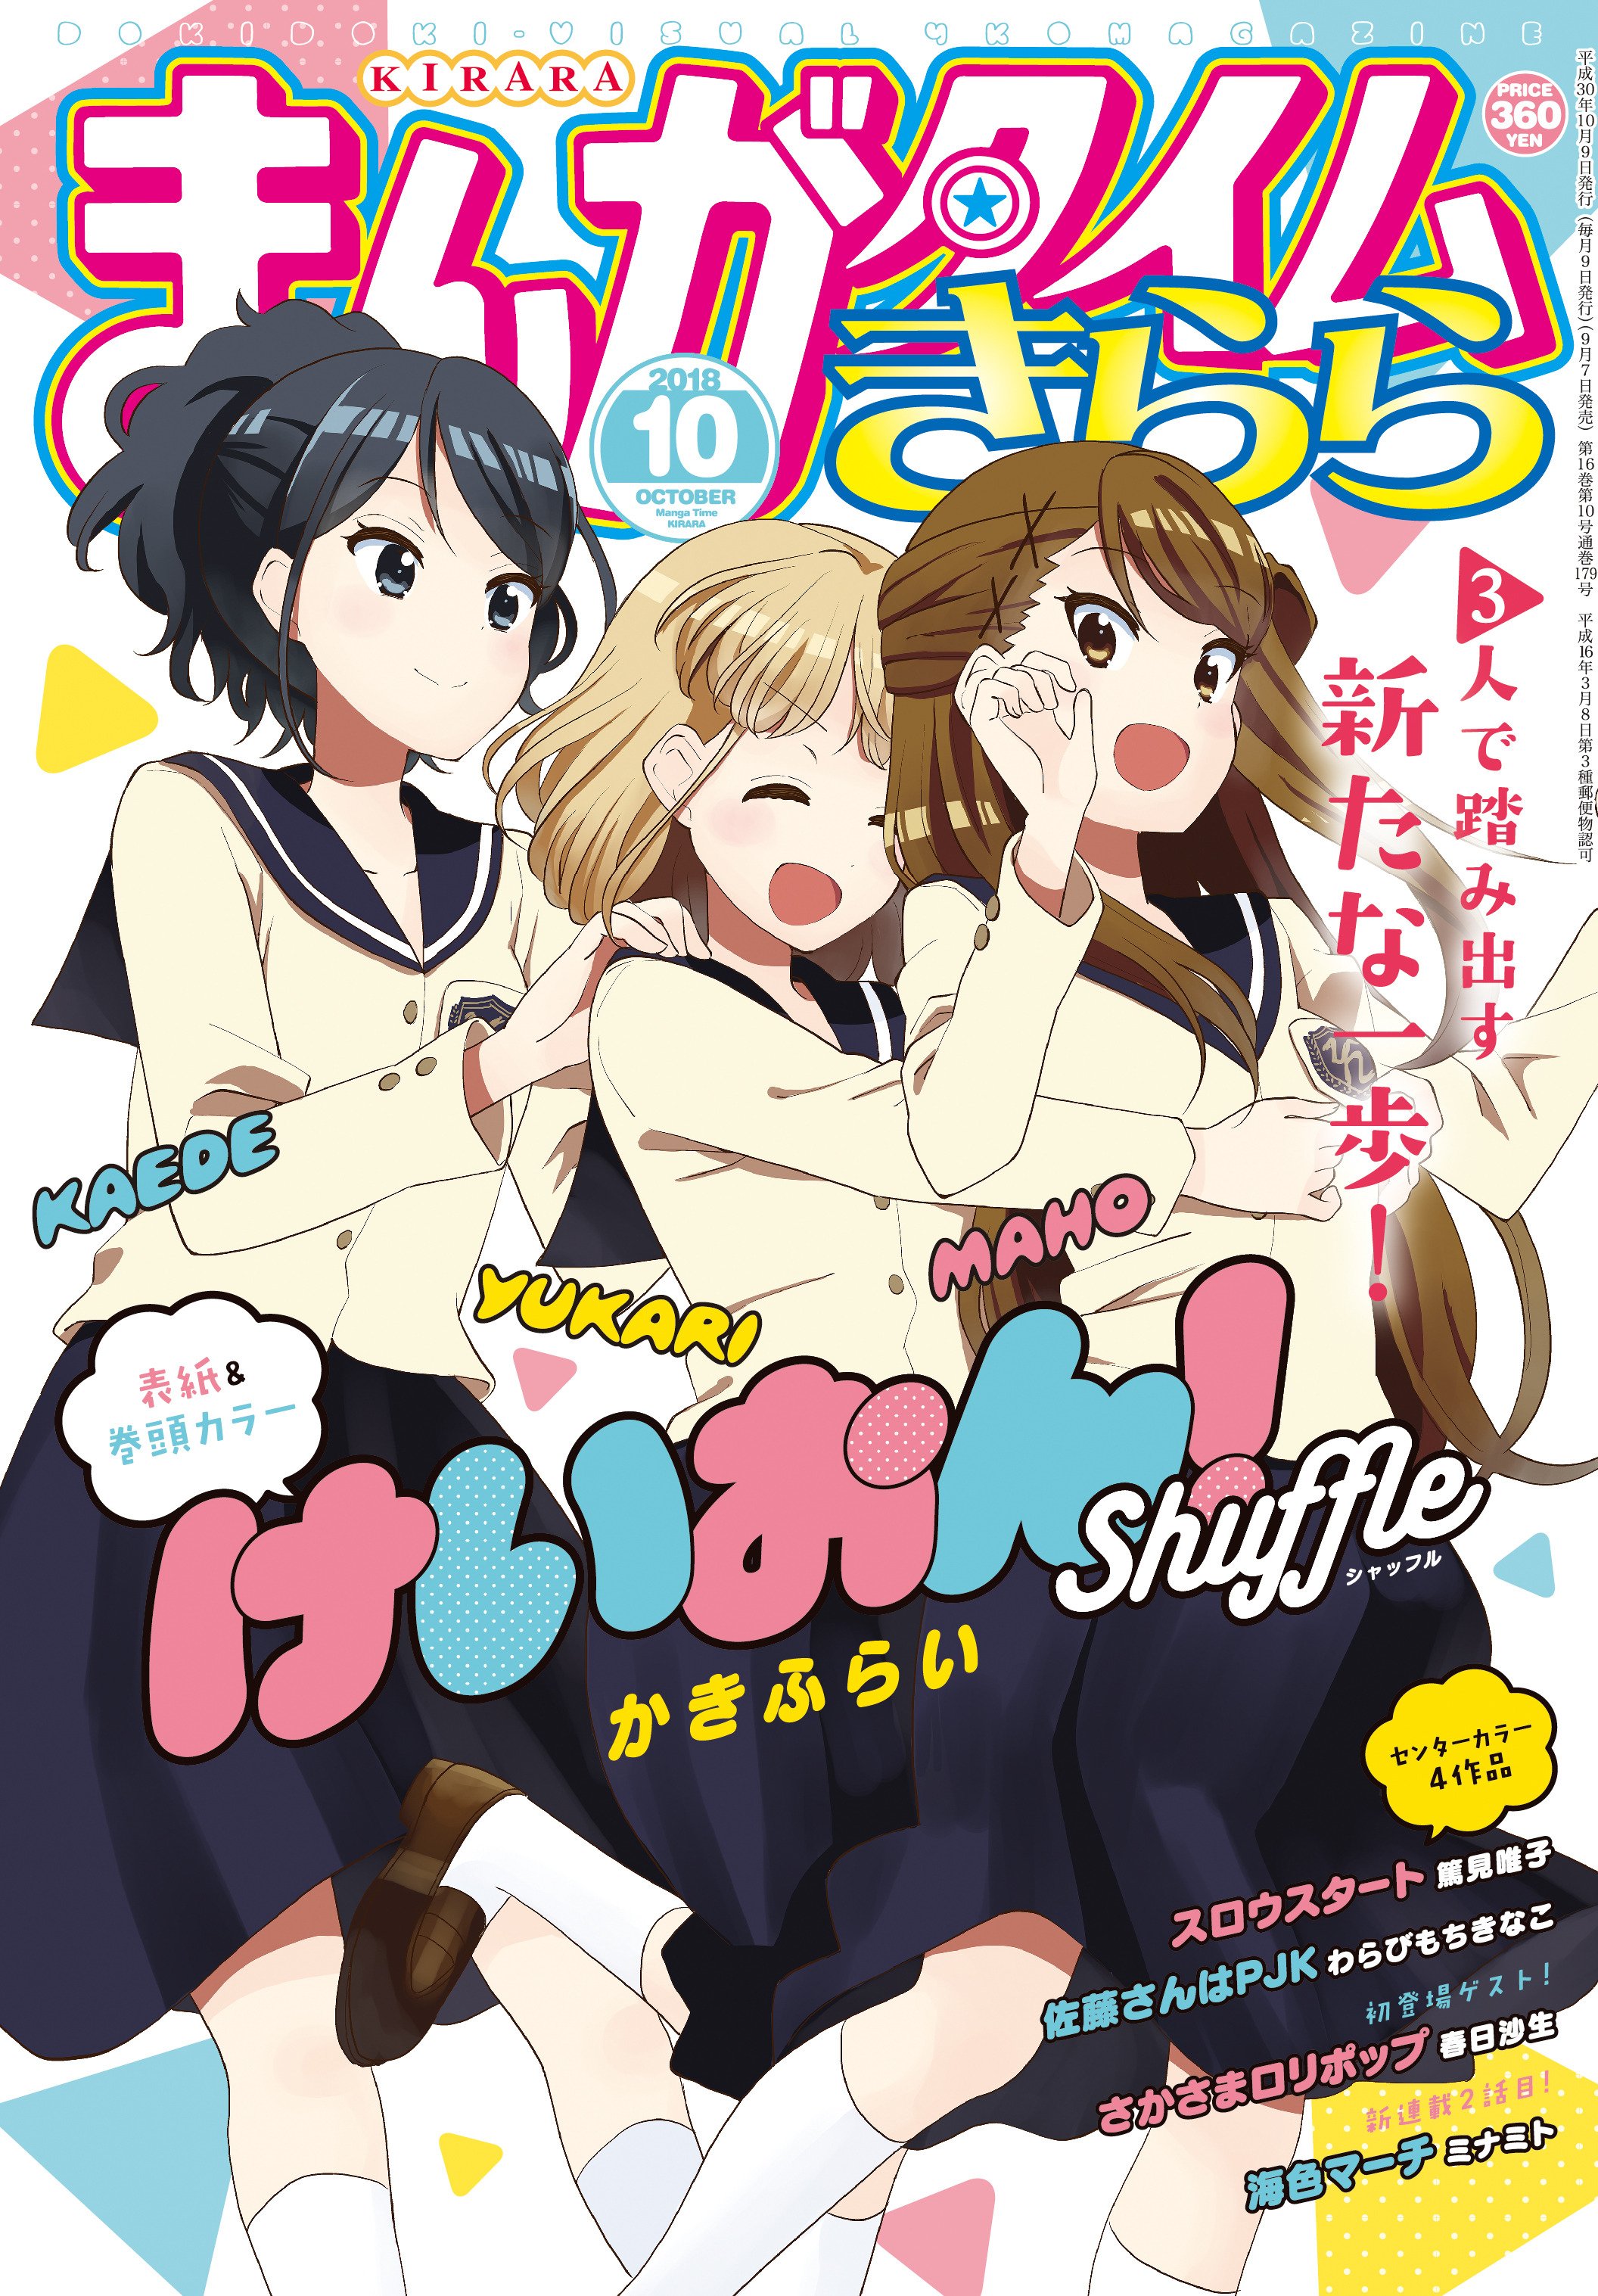 CDJapan : K-On! (Keion!) 3 (Manga Time KR Comics) Kakifly BOOK